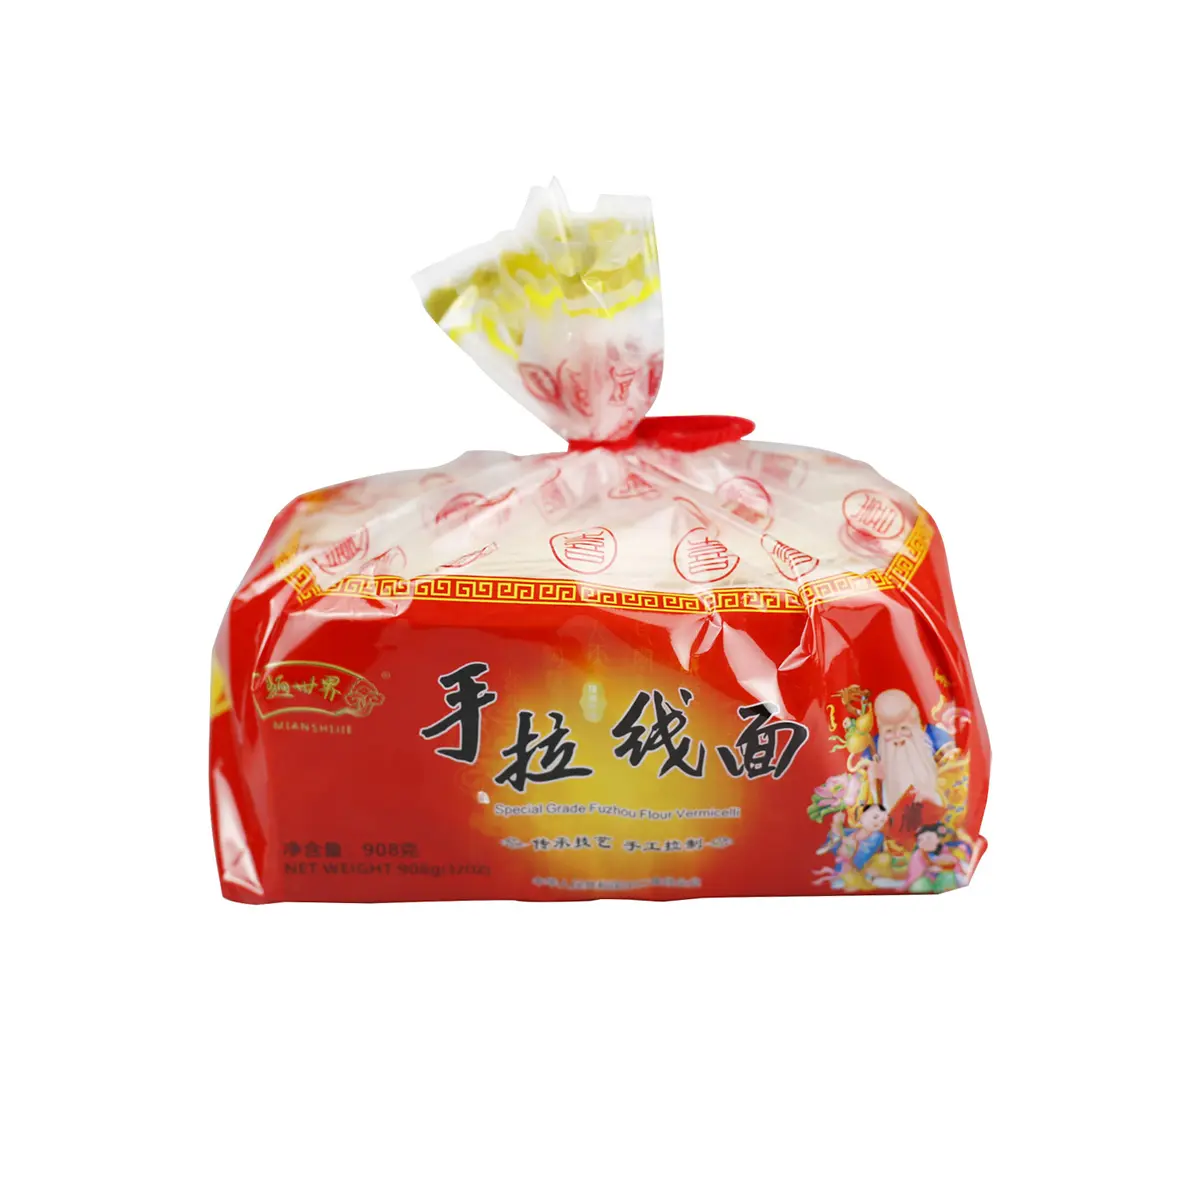 Wholesale China special Fuzhou handmade noodles 908g